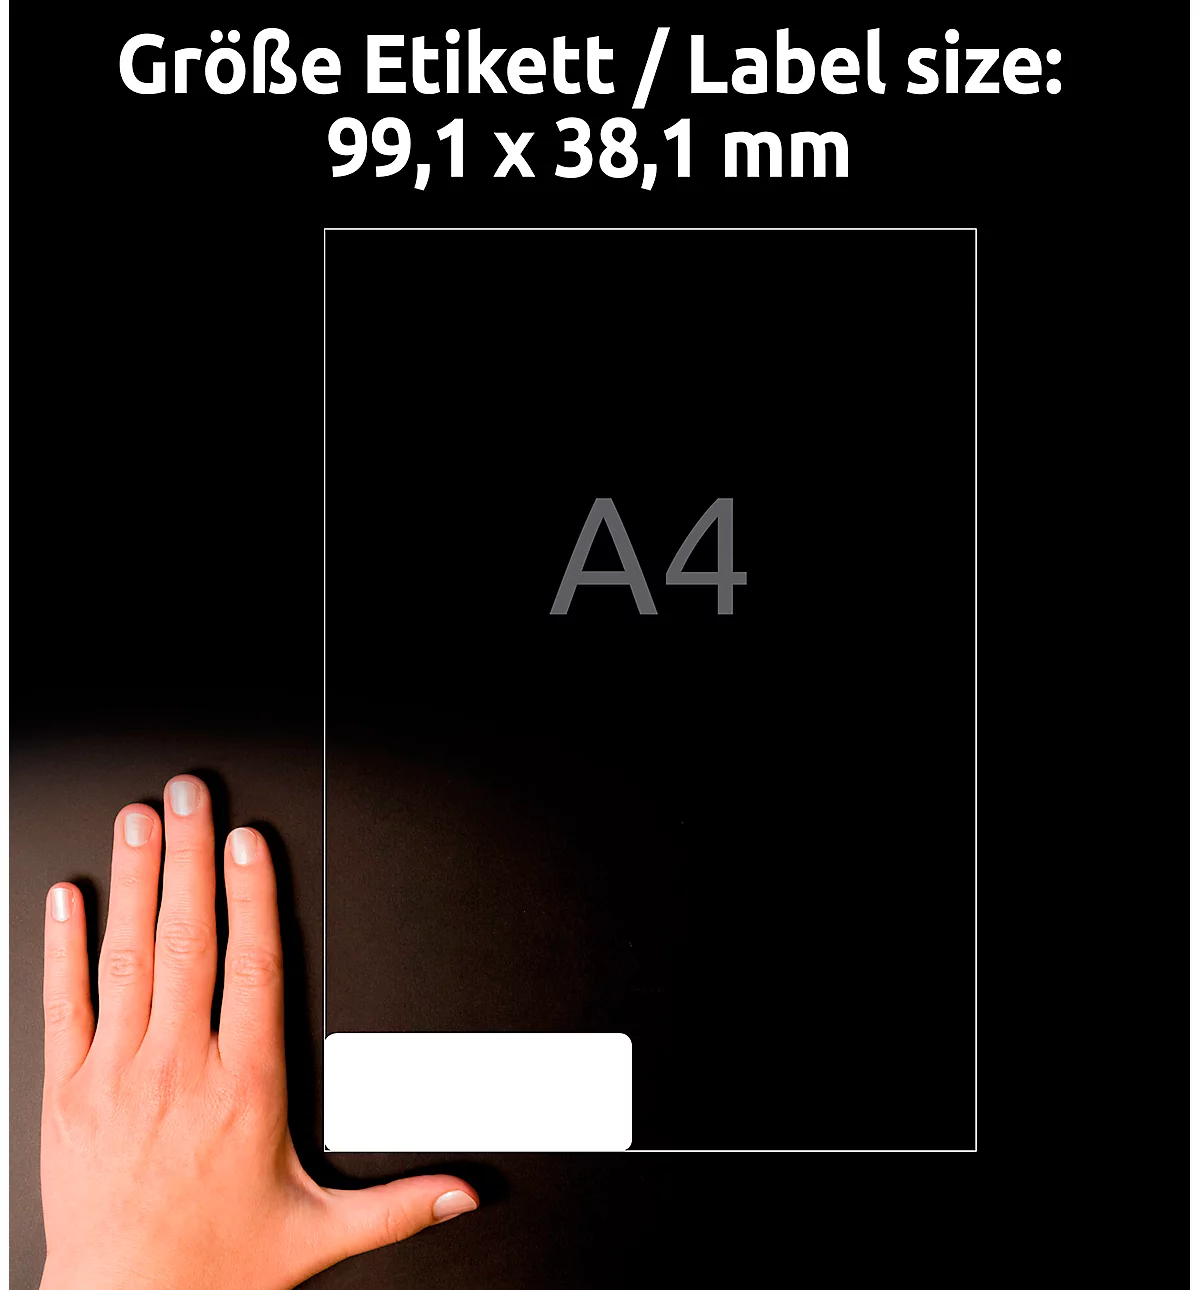 Avery Zweckform J8163-25 Adress-Etiketten, 99,1 x 38,1 mm